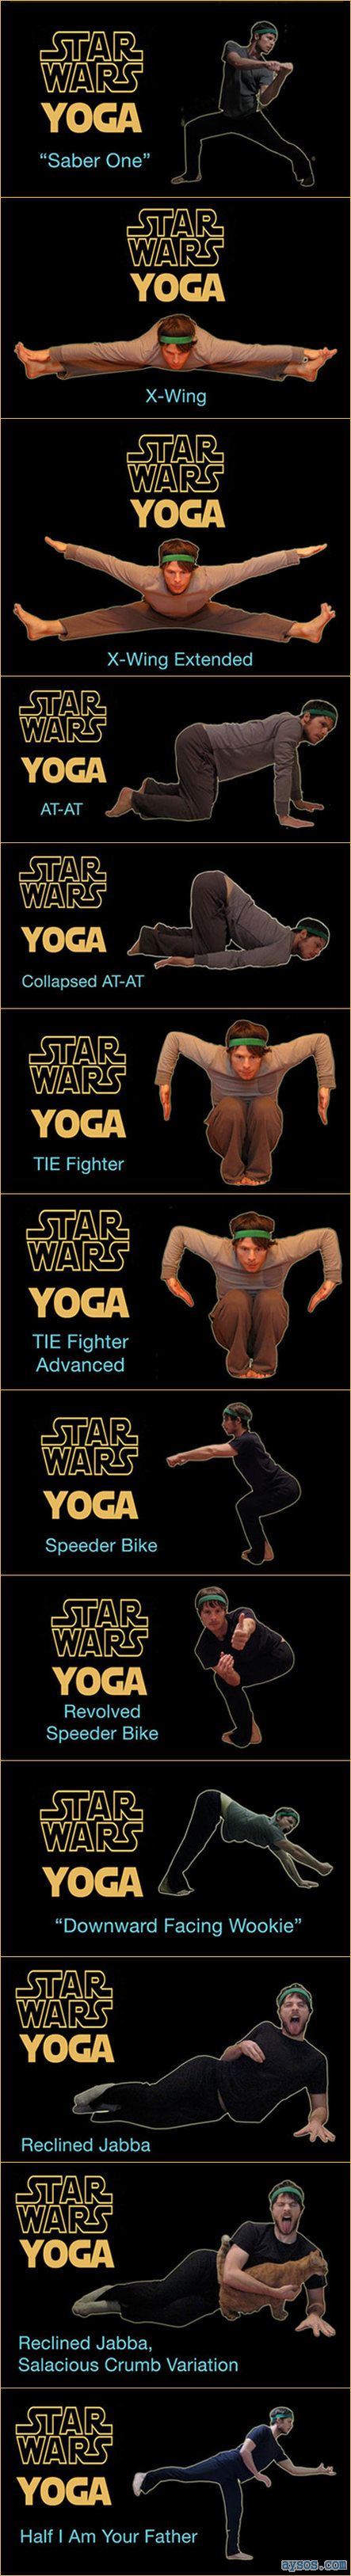 Yoga Star Wars style